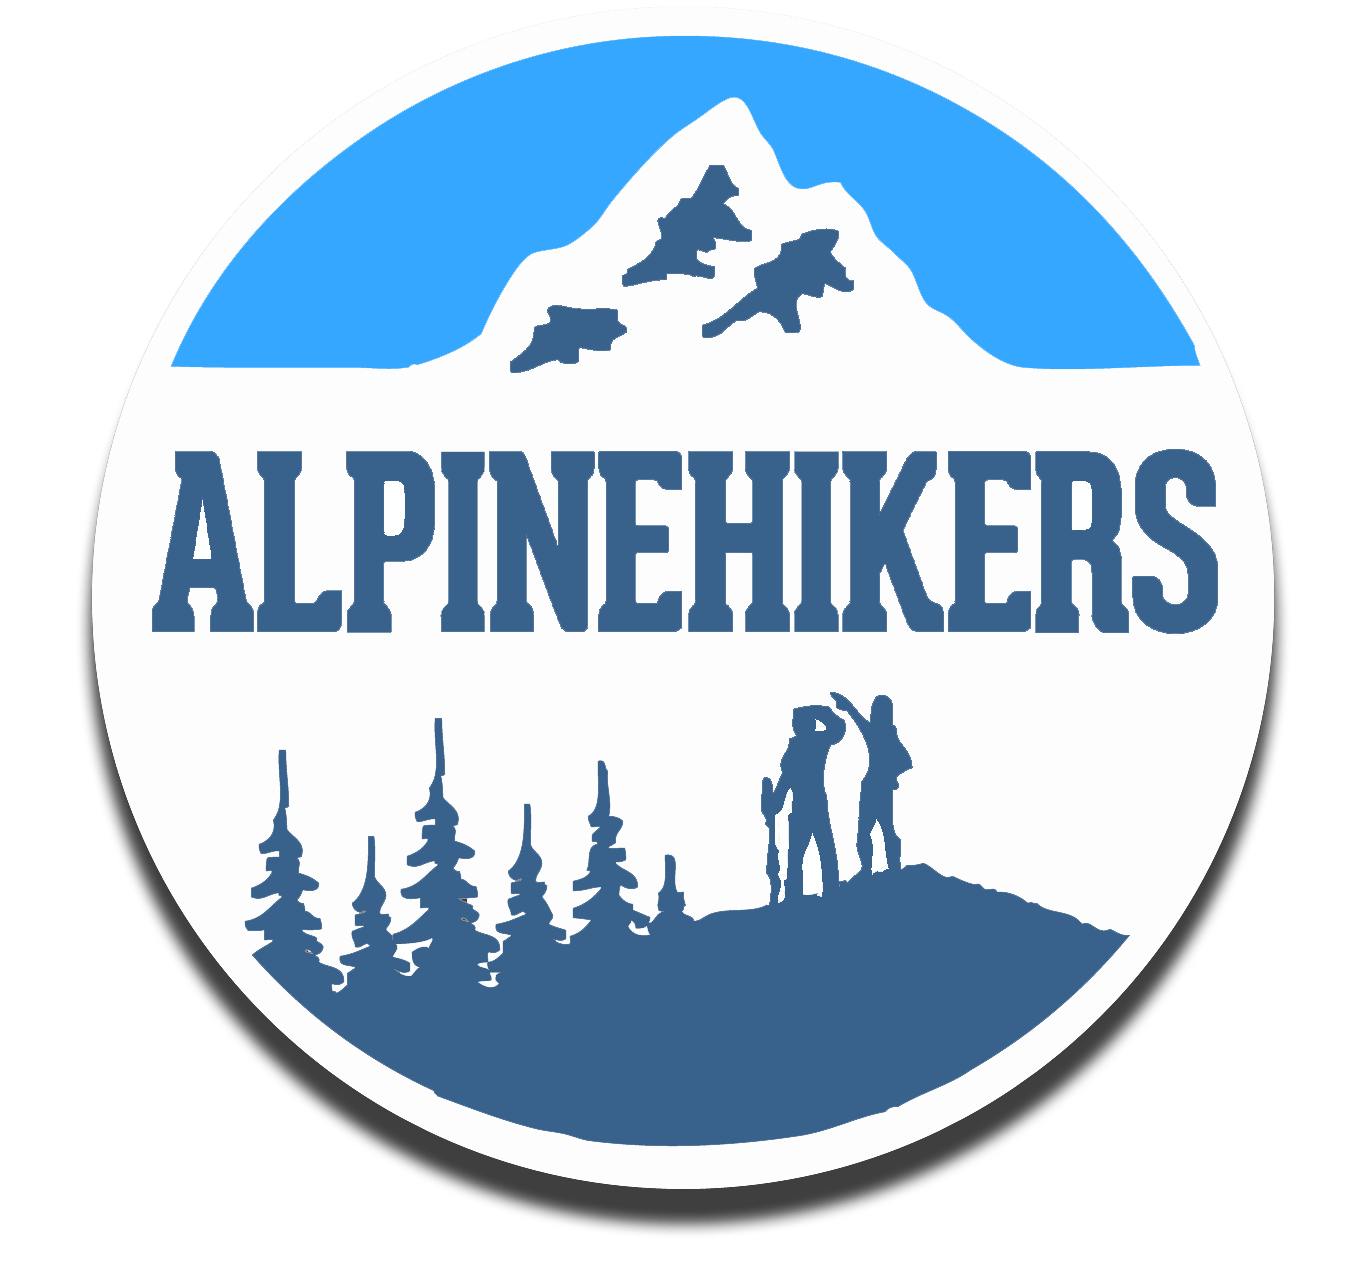 Hiker Logo - Alpinehikers | Alpinehikers Hiking Tours in Switzerland